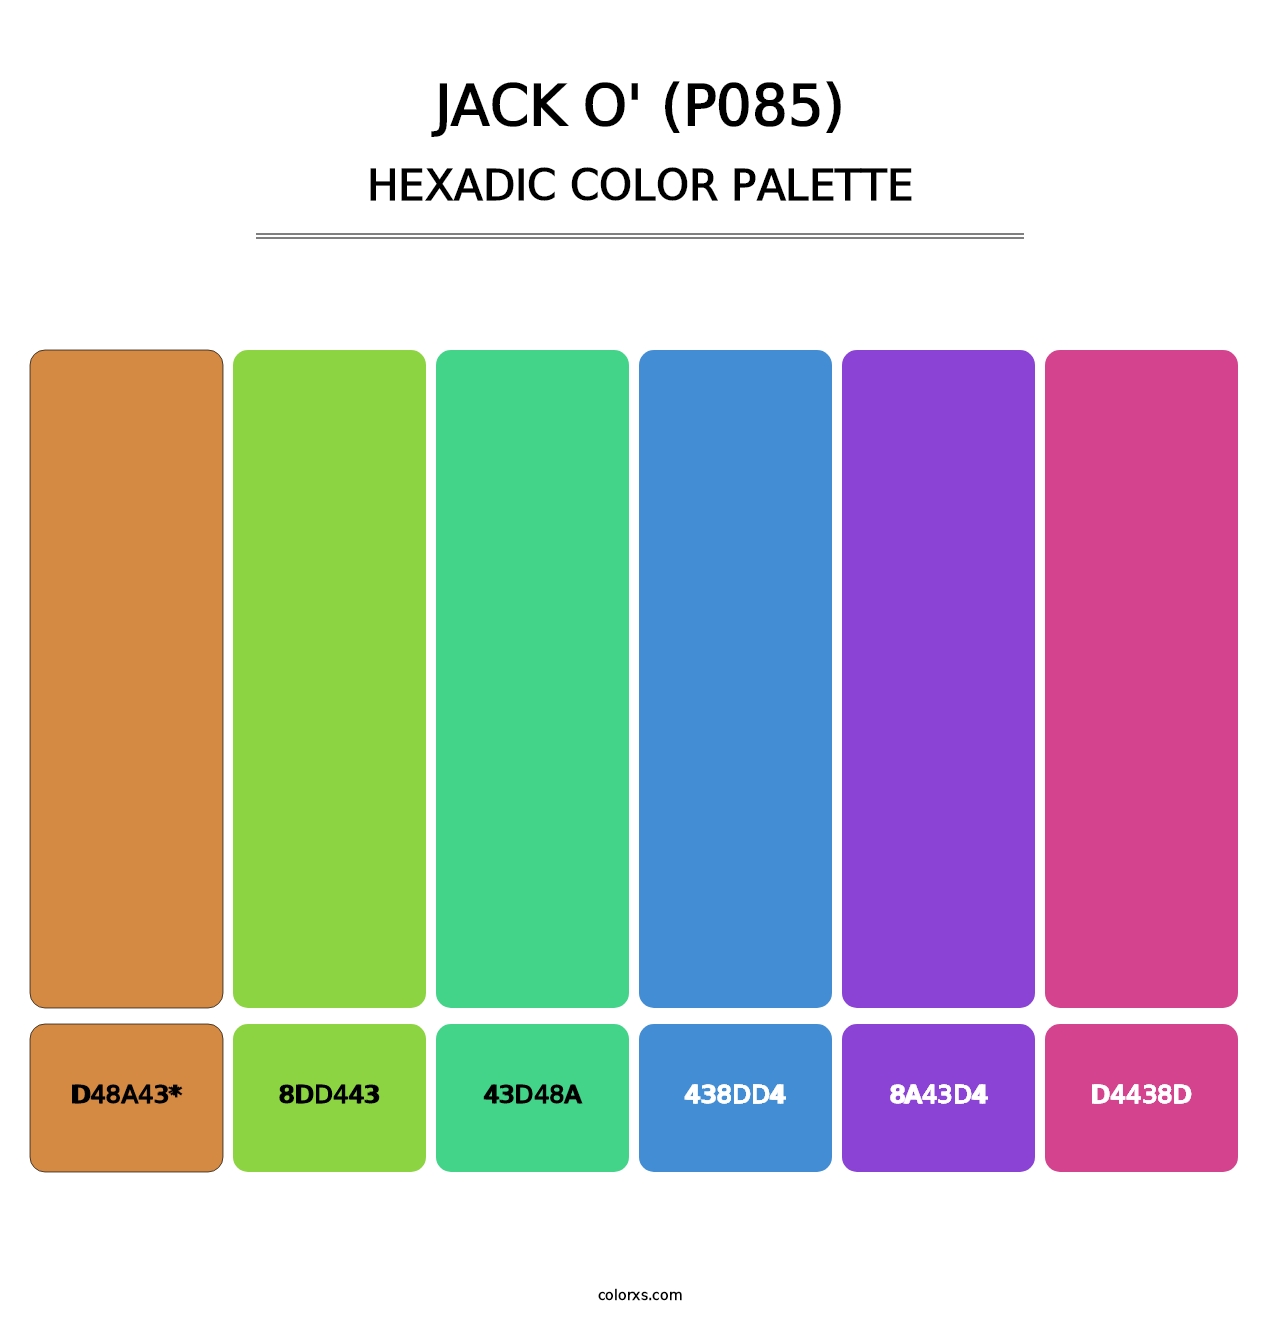 Jack O' (P085) - Hexadic Color Palette